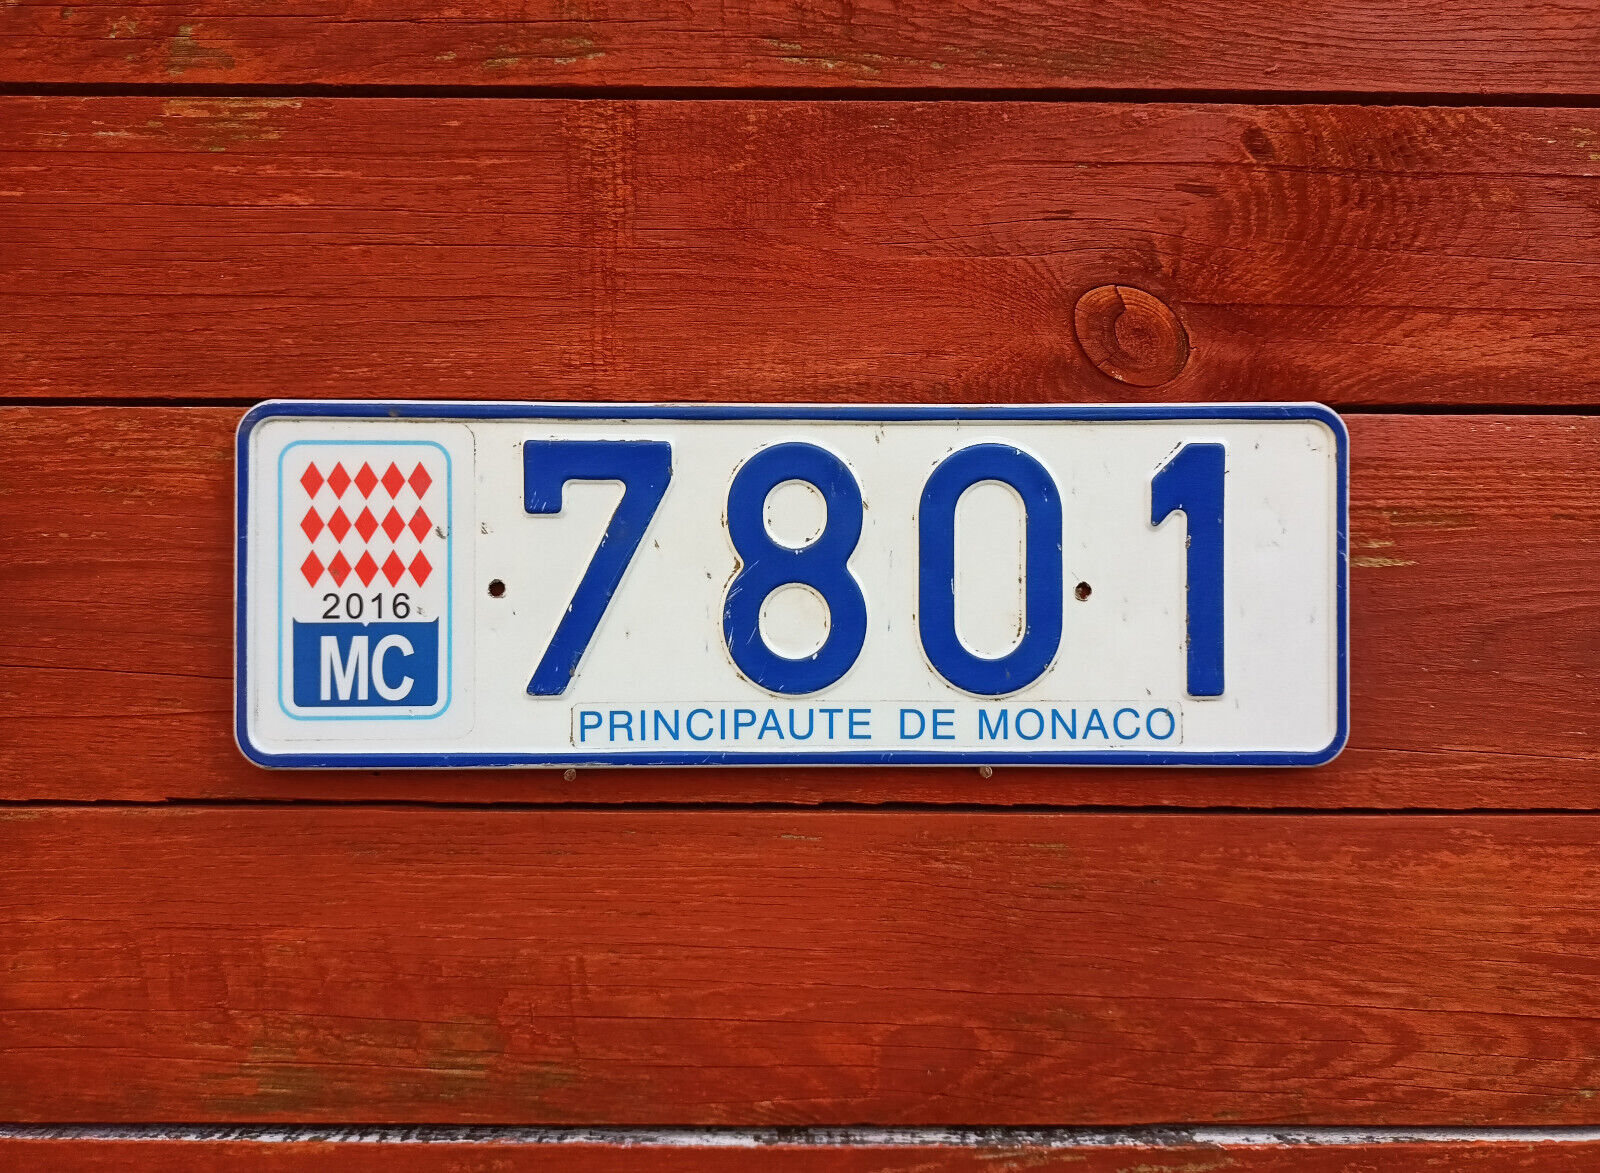 MONACO/MONEGASQUE License Plate from Europe